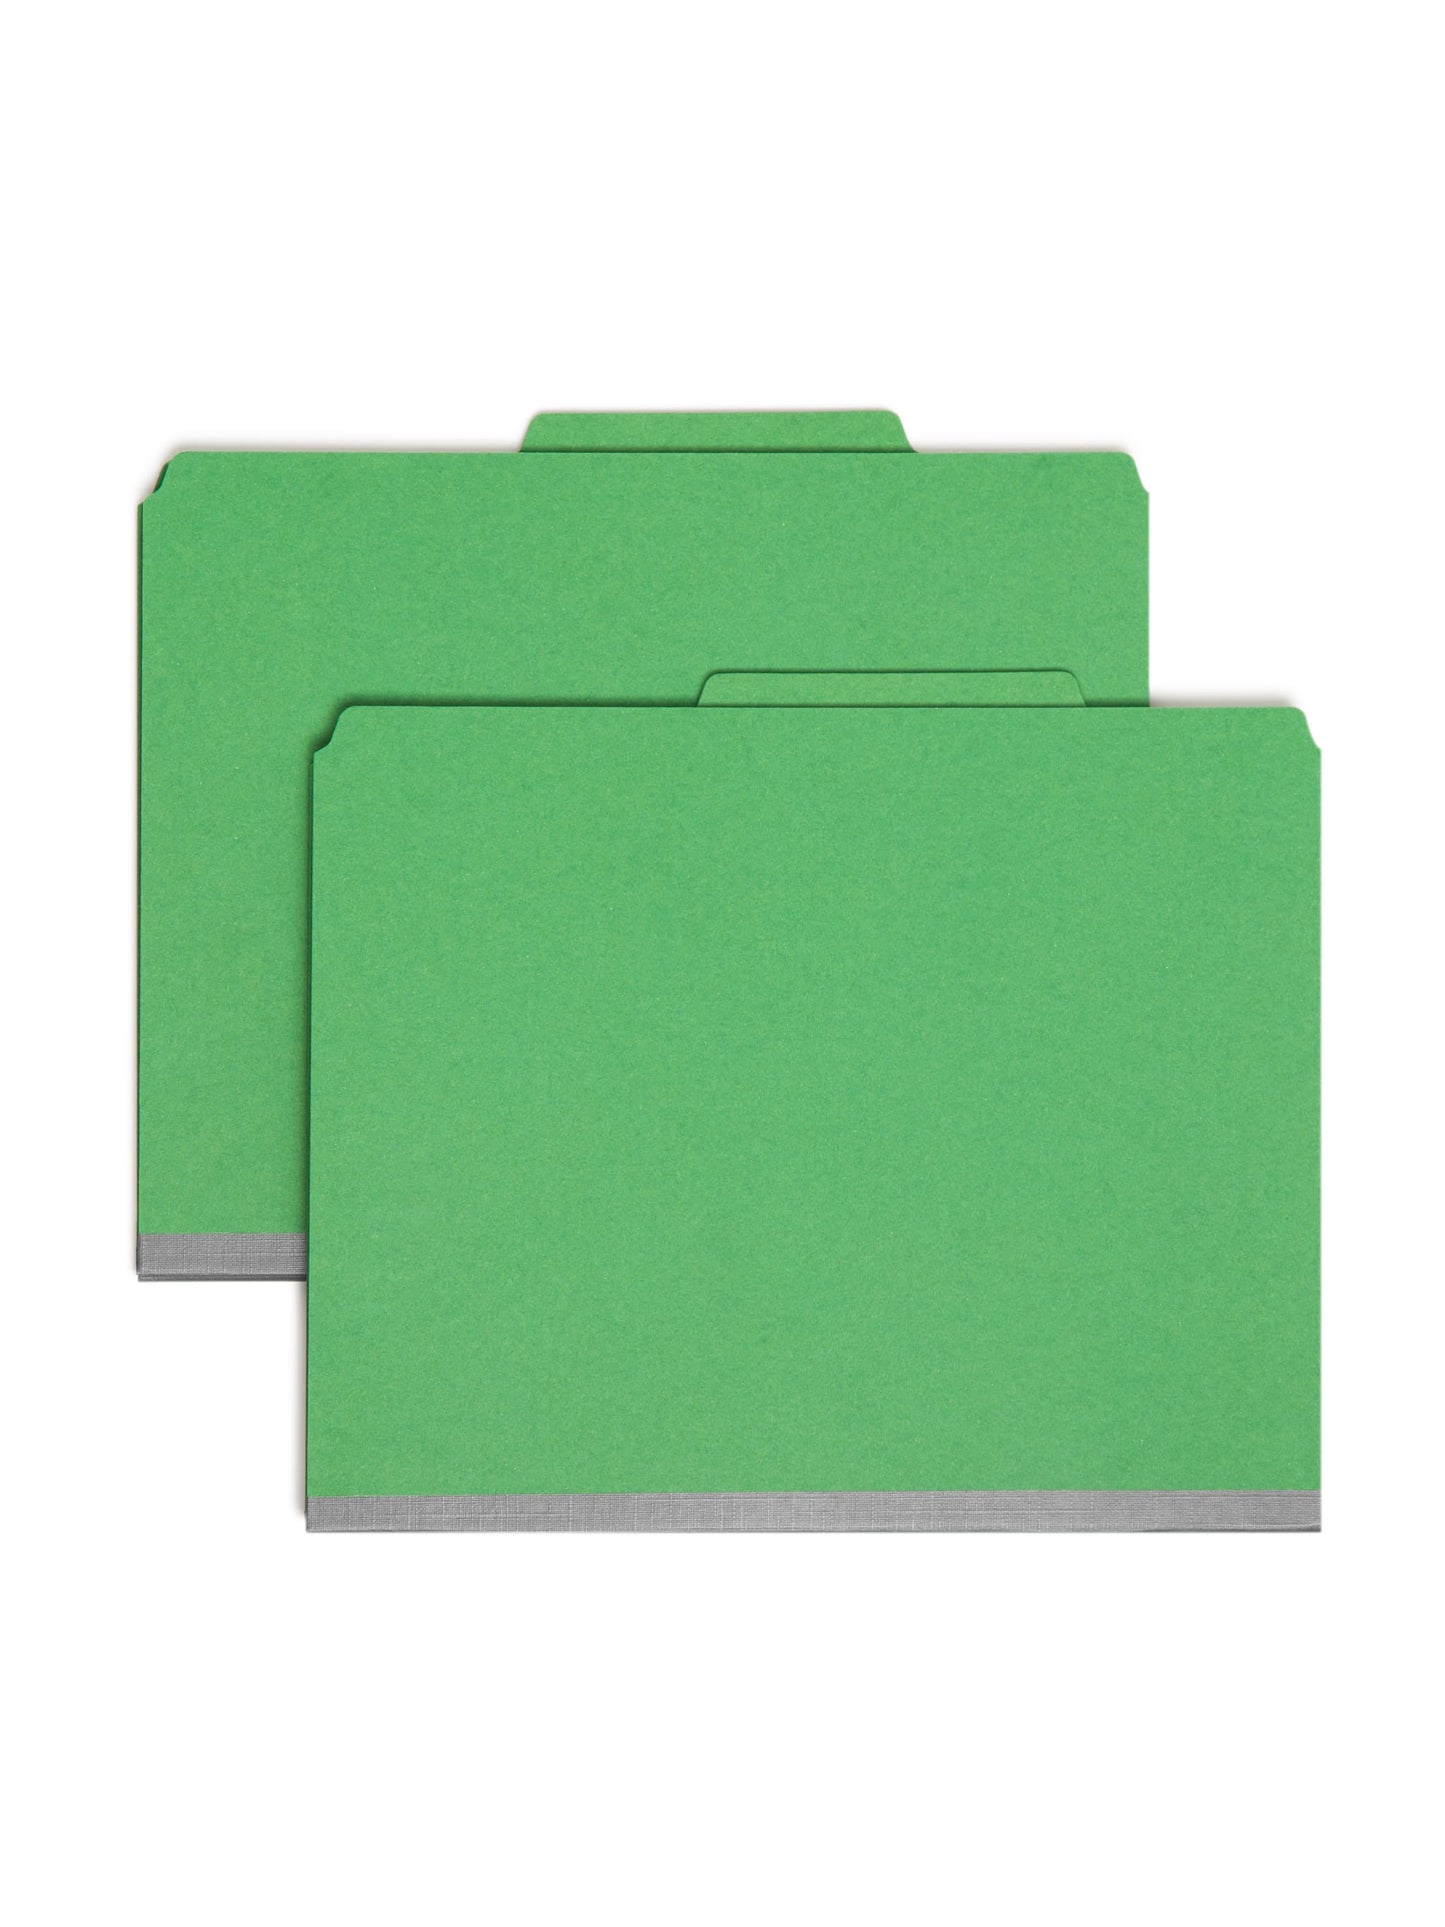 SafeSHIELD® Pressboard Classification File Folders with Pocket Dividers, Green Color, Letter Size, 